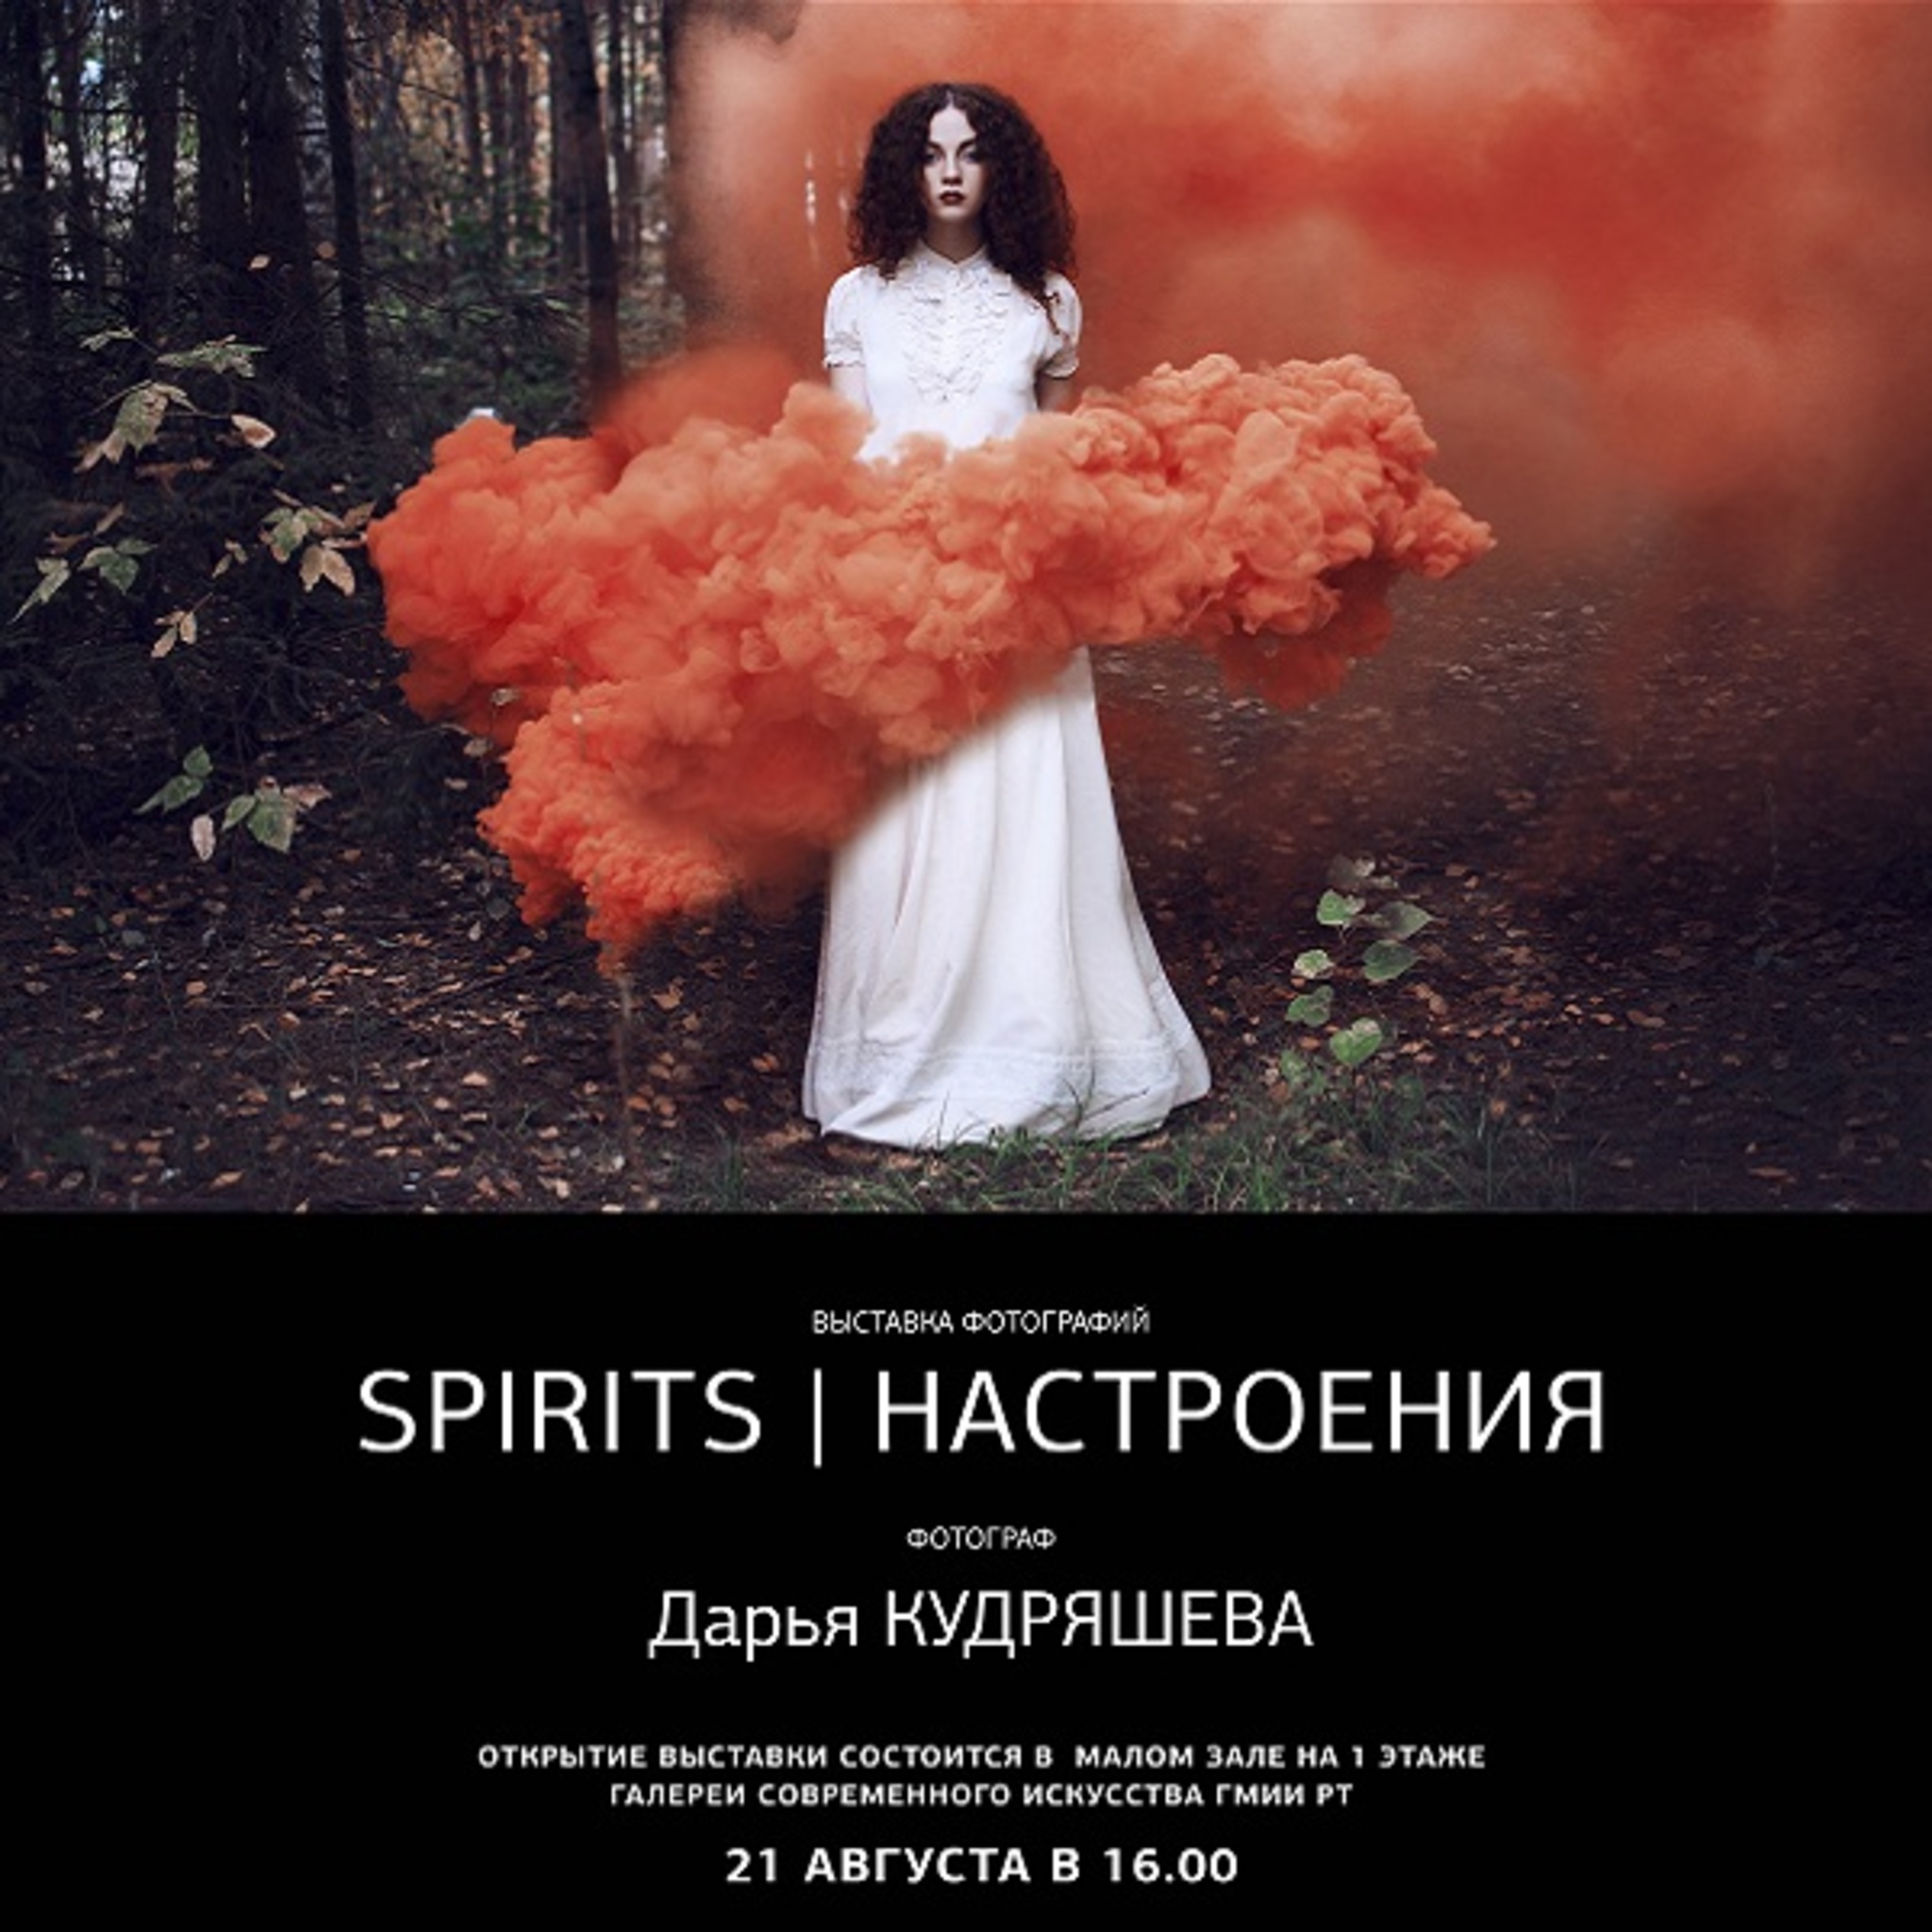 Photo exhibition Darya Kudryashova Spirits. Moods